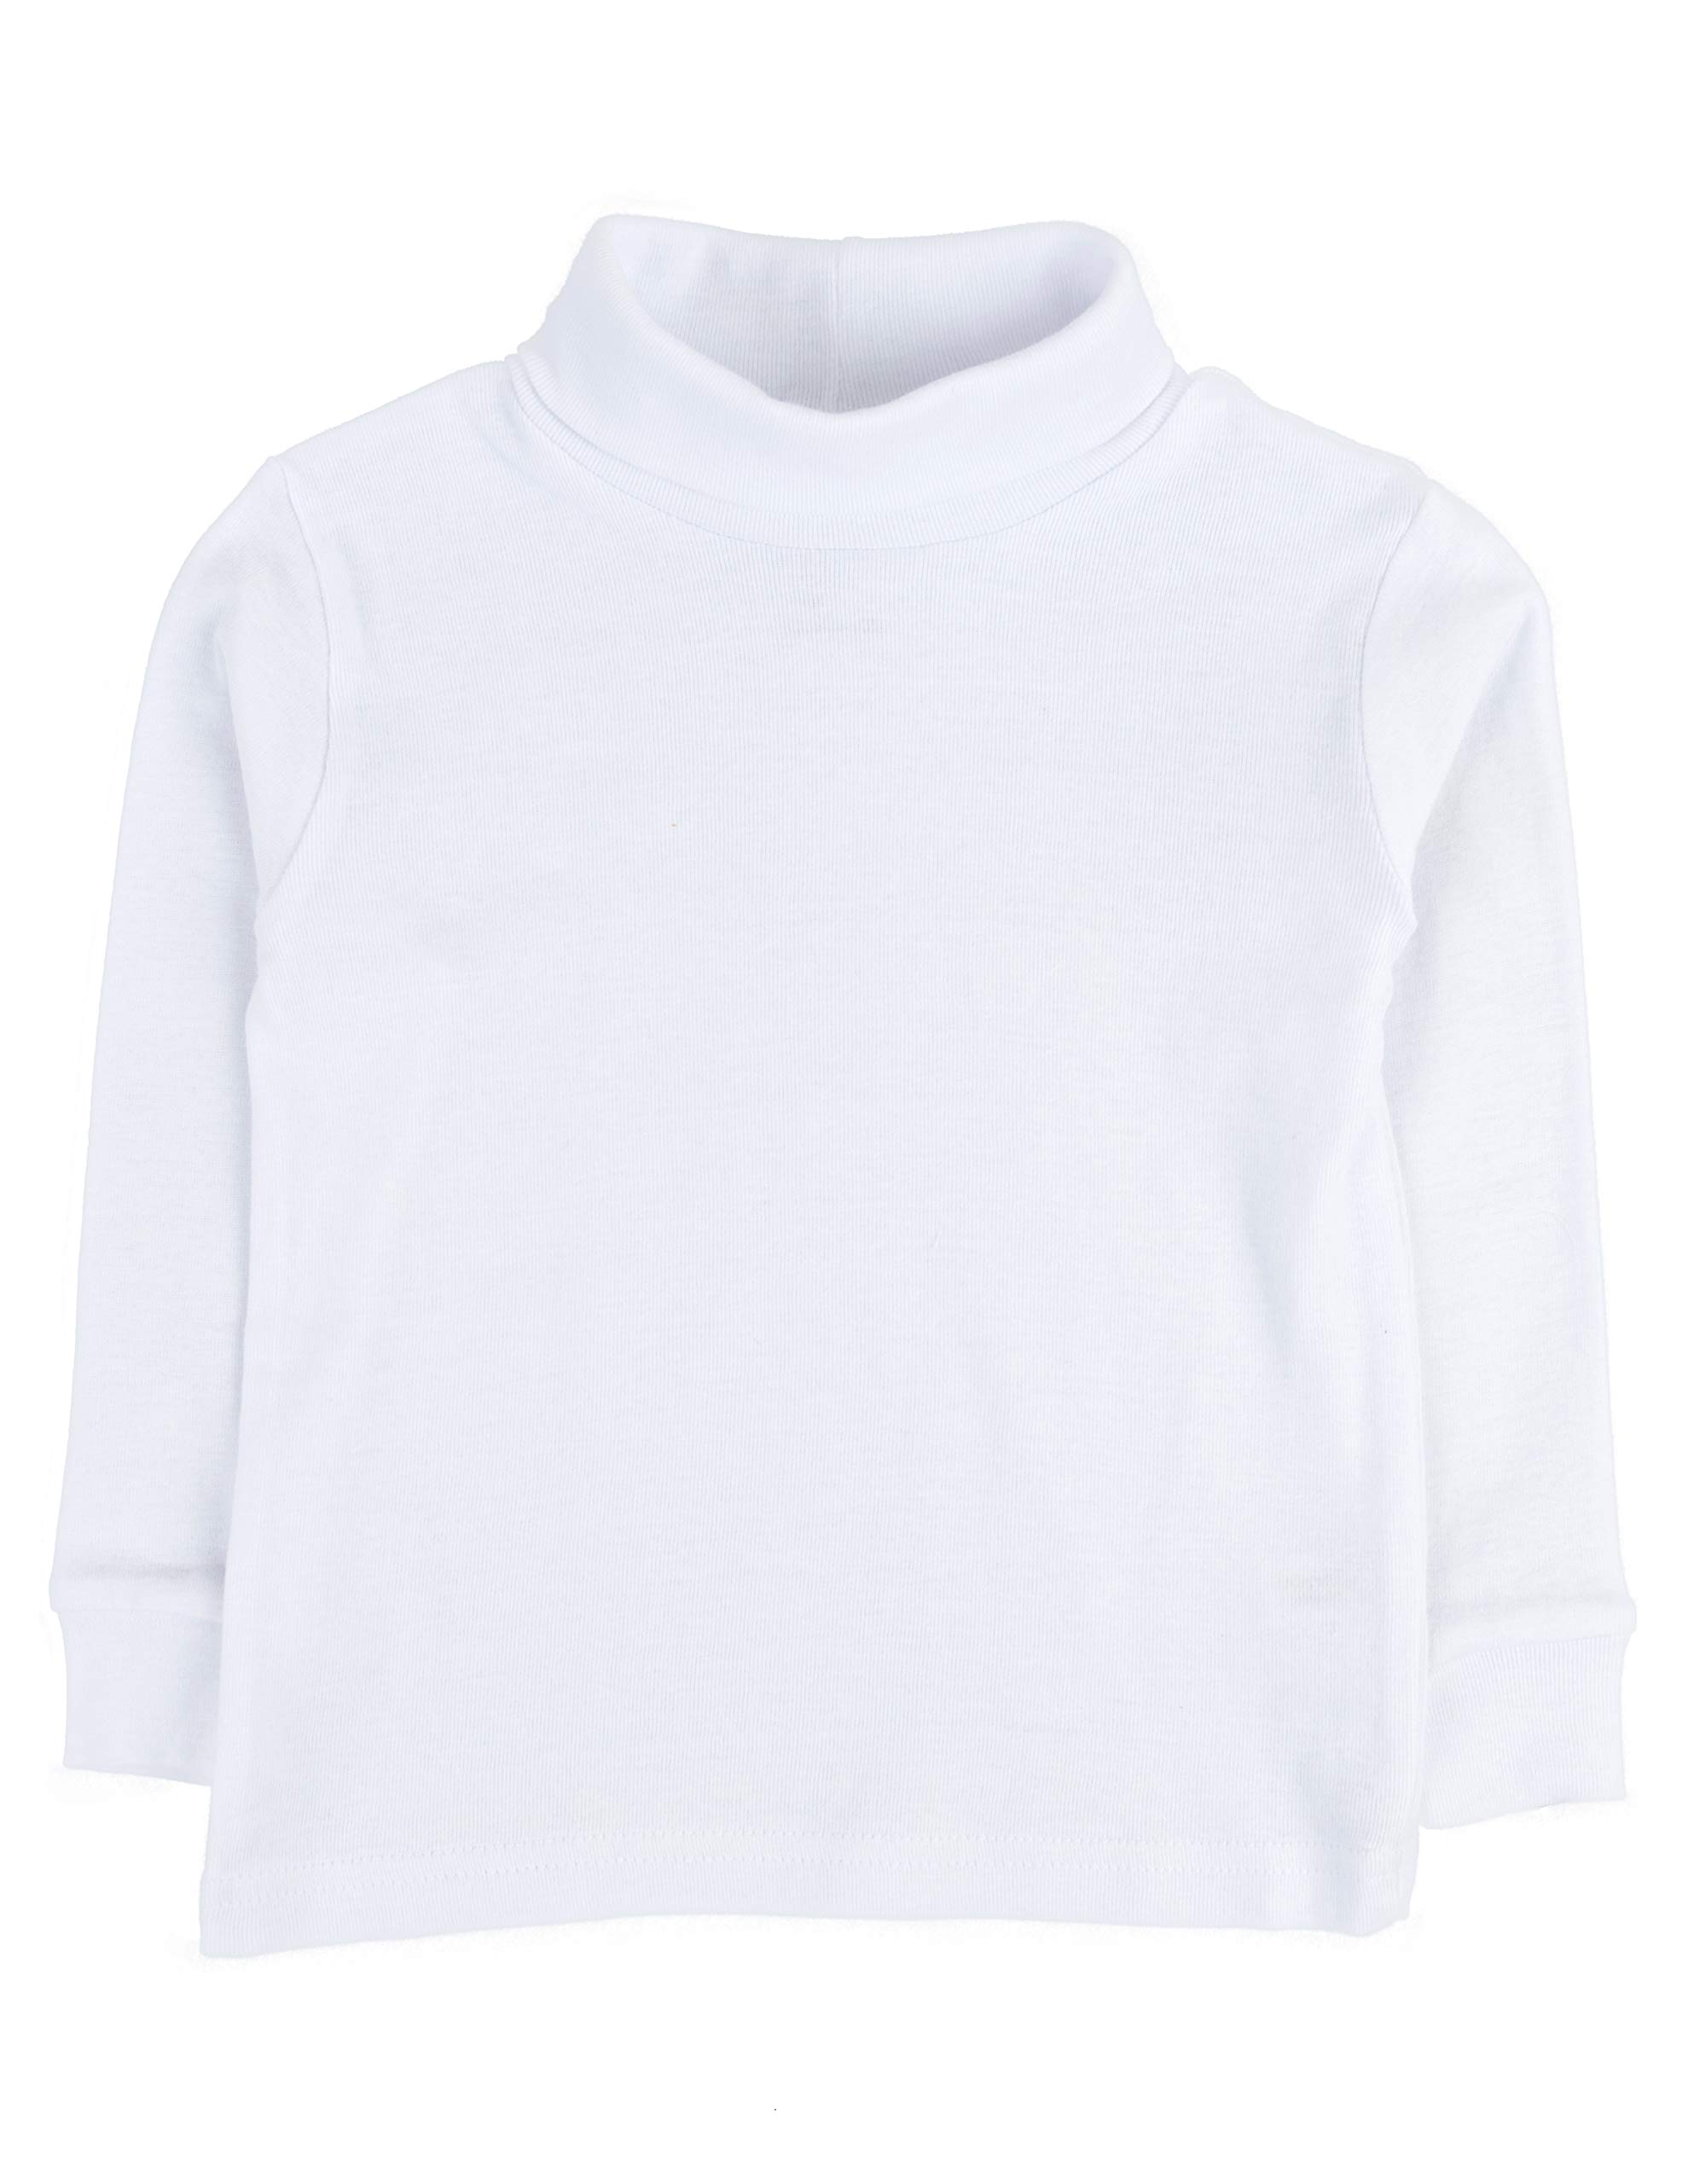 Leveret Girls Boys & Toddler Solid Turtleneck 100% Cotton Kids Shirt (Size 4 Toddler, White)